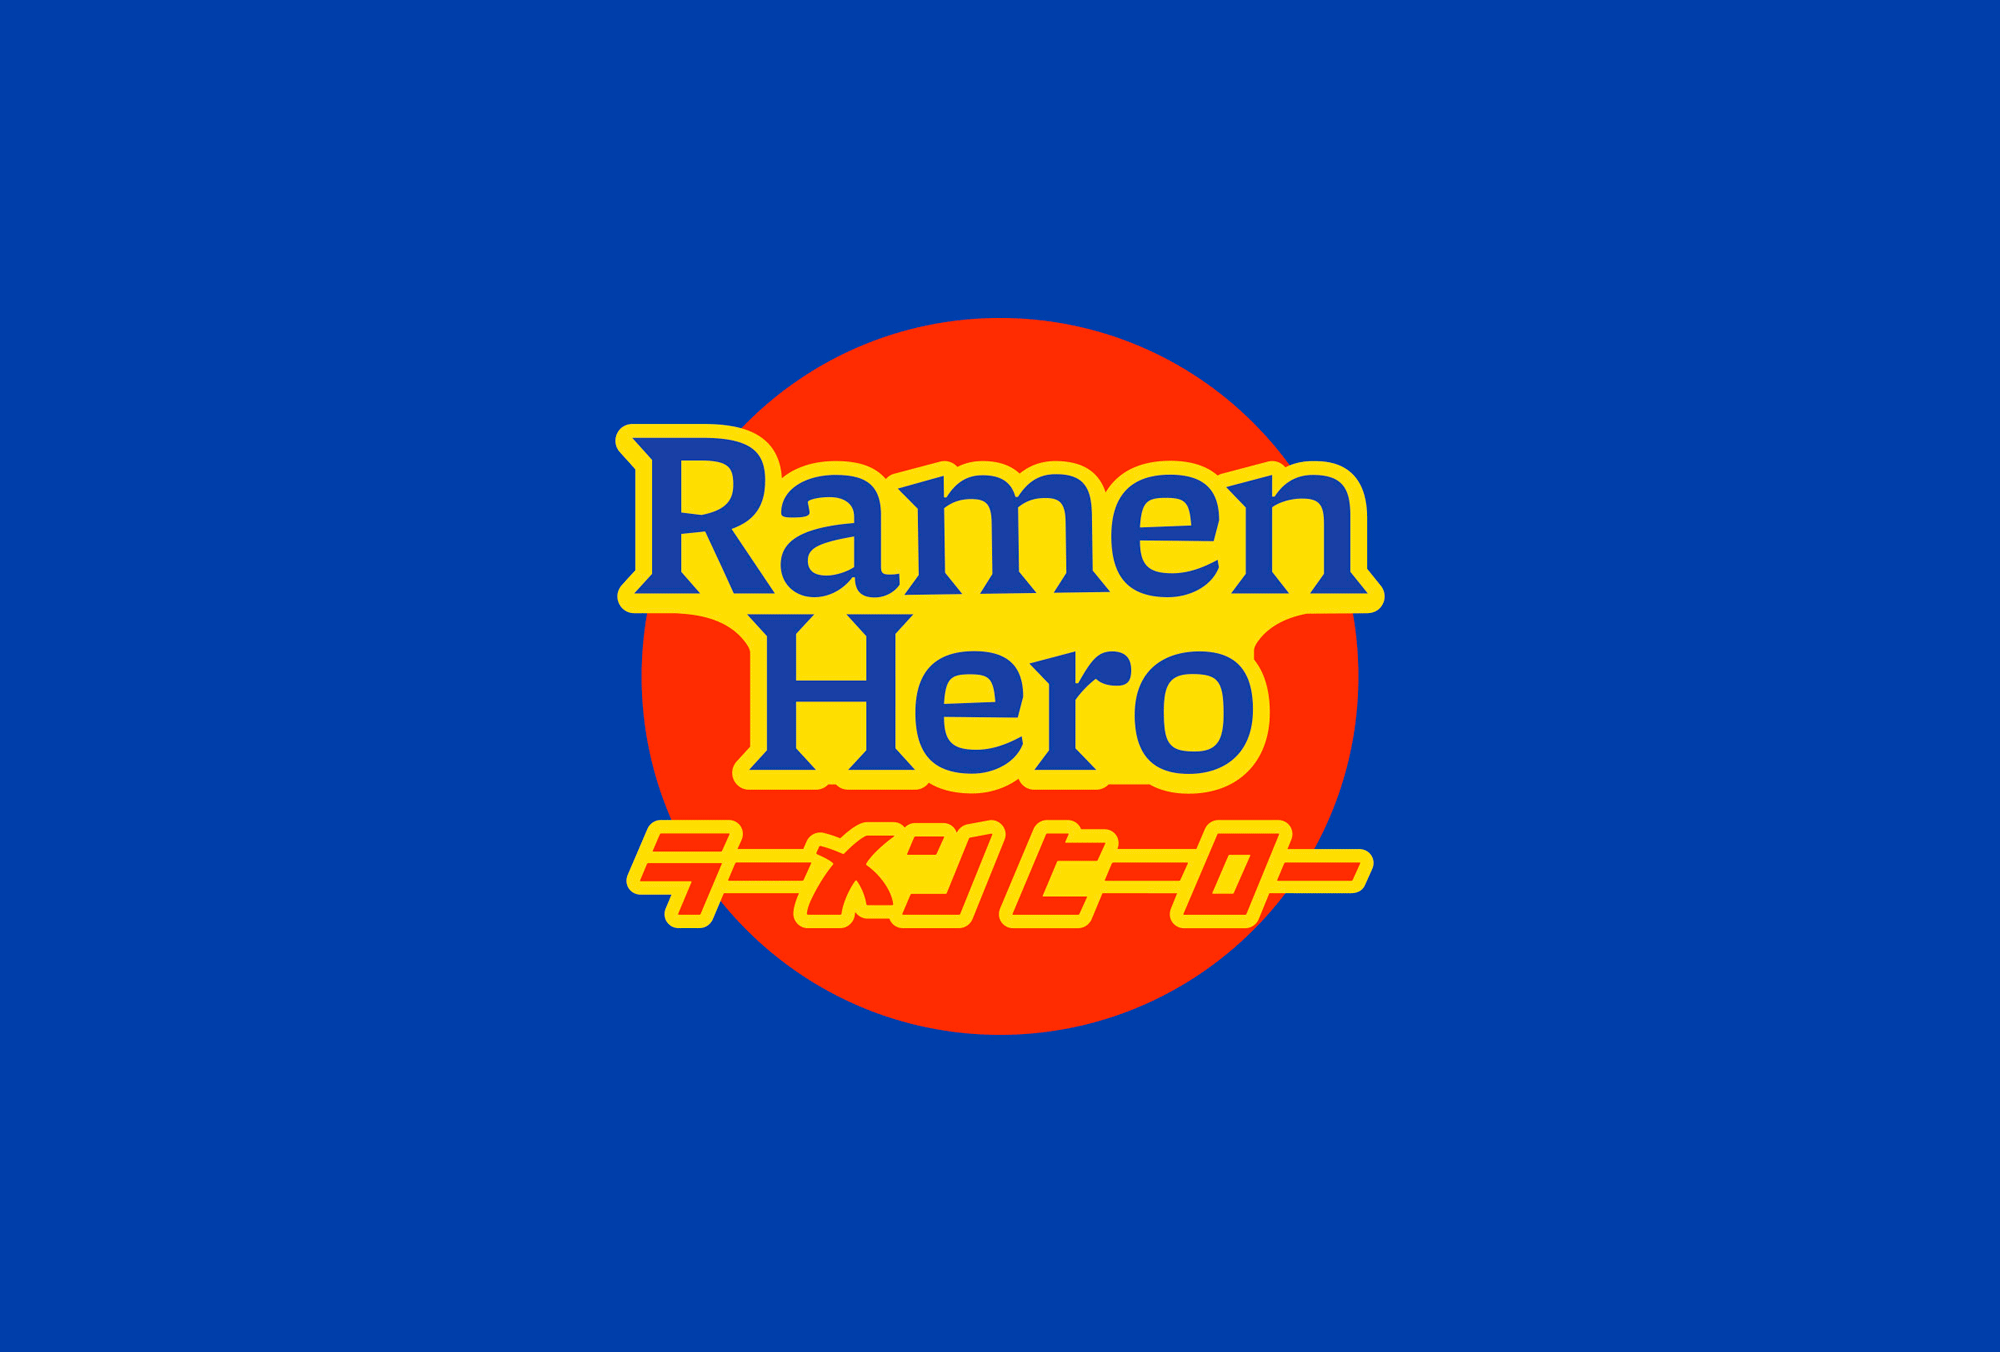 New Logo, Identity, and Awesome Cowboy for Ramen Hero by Iyashi